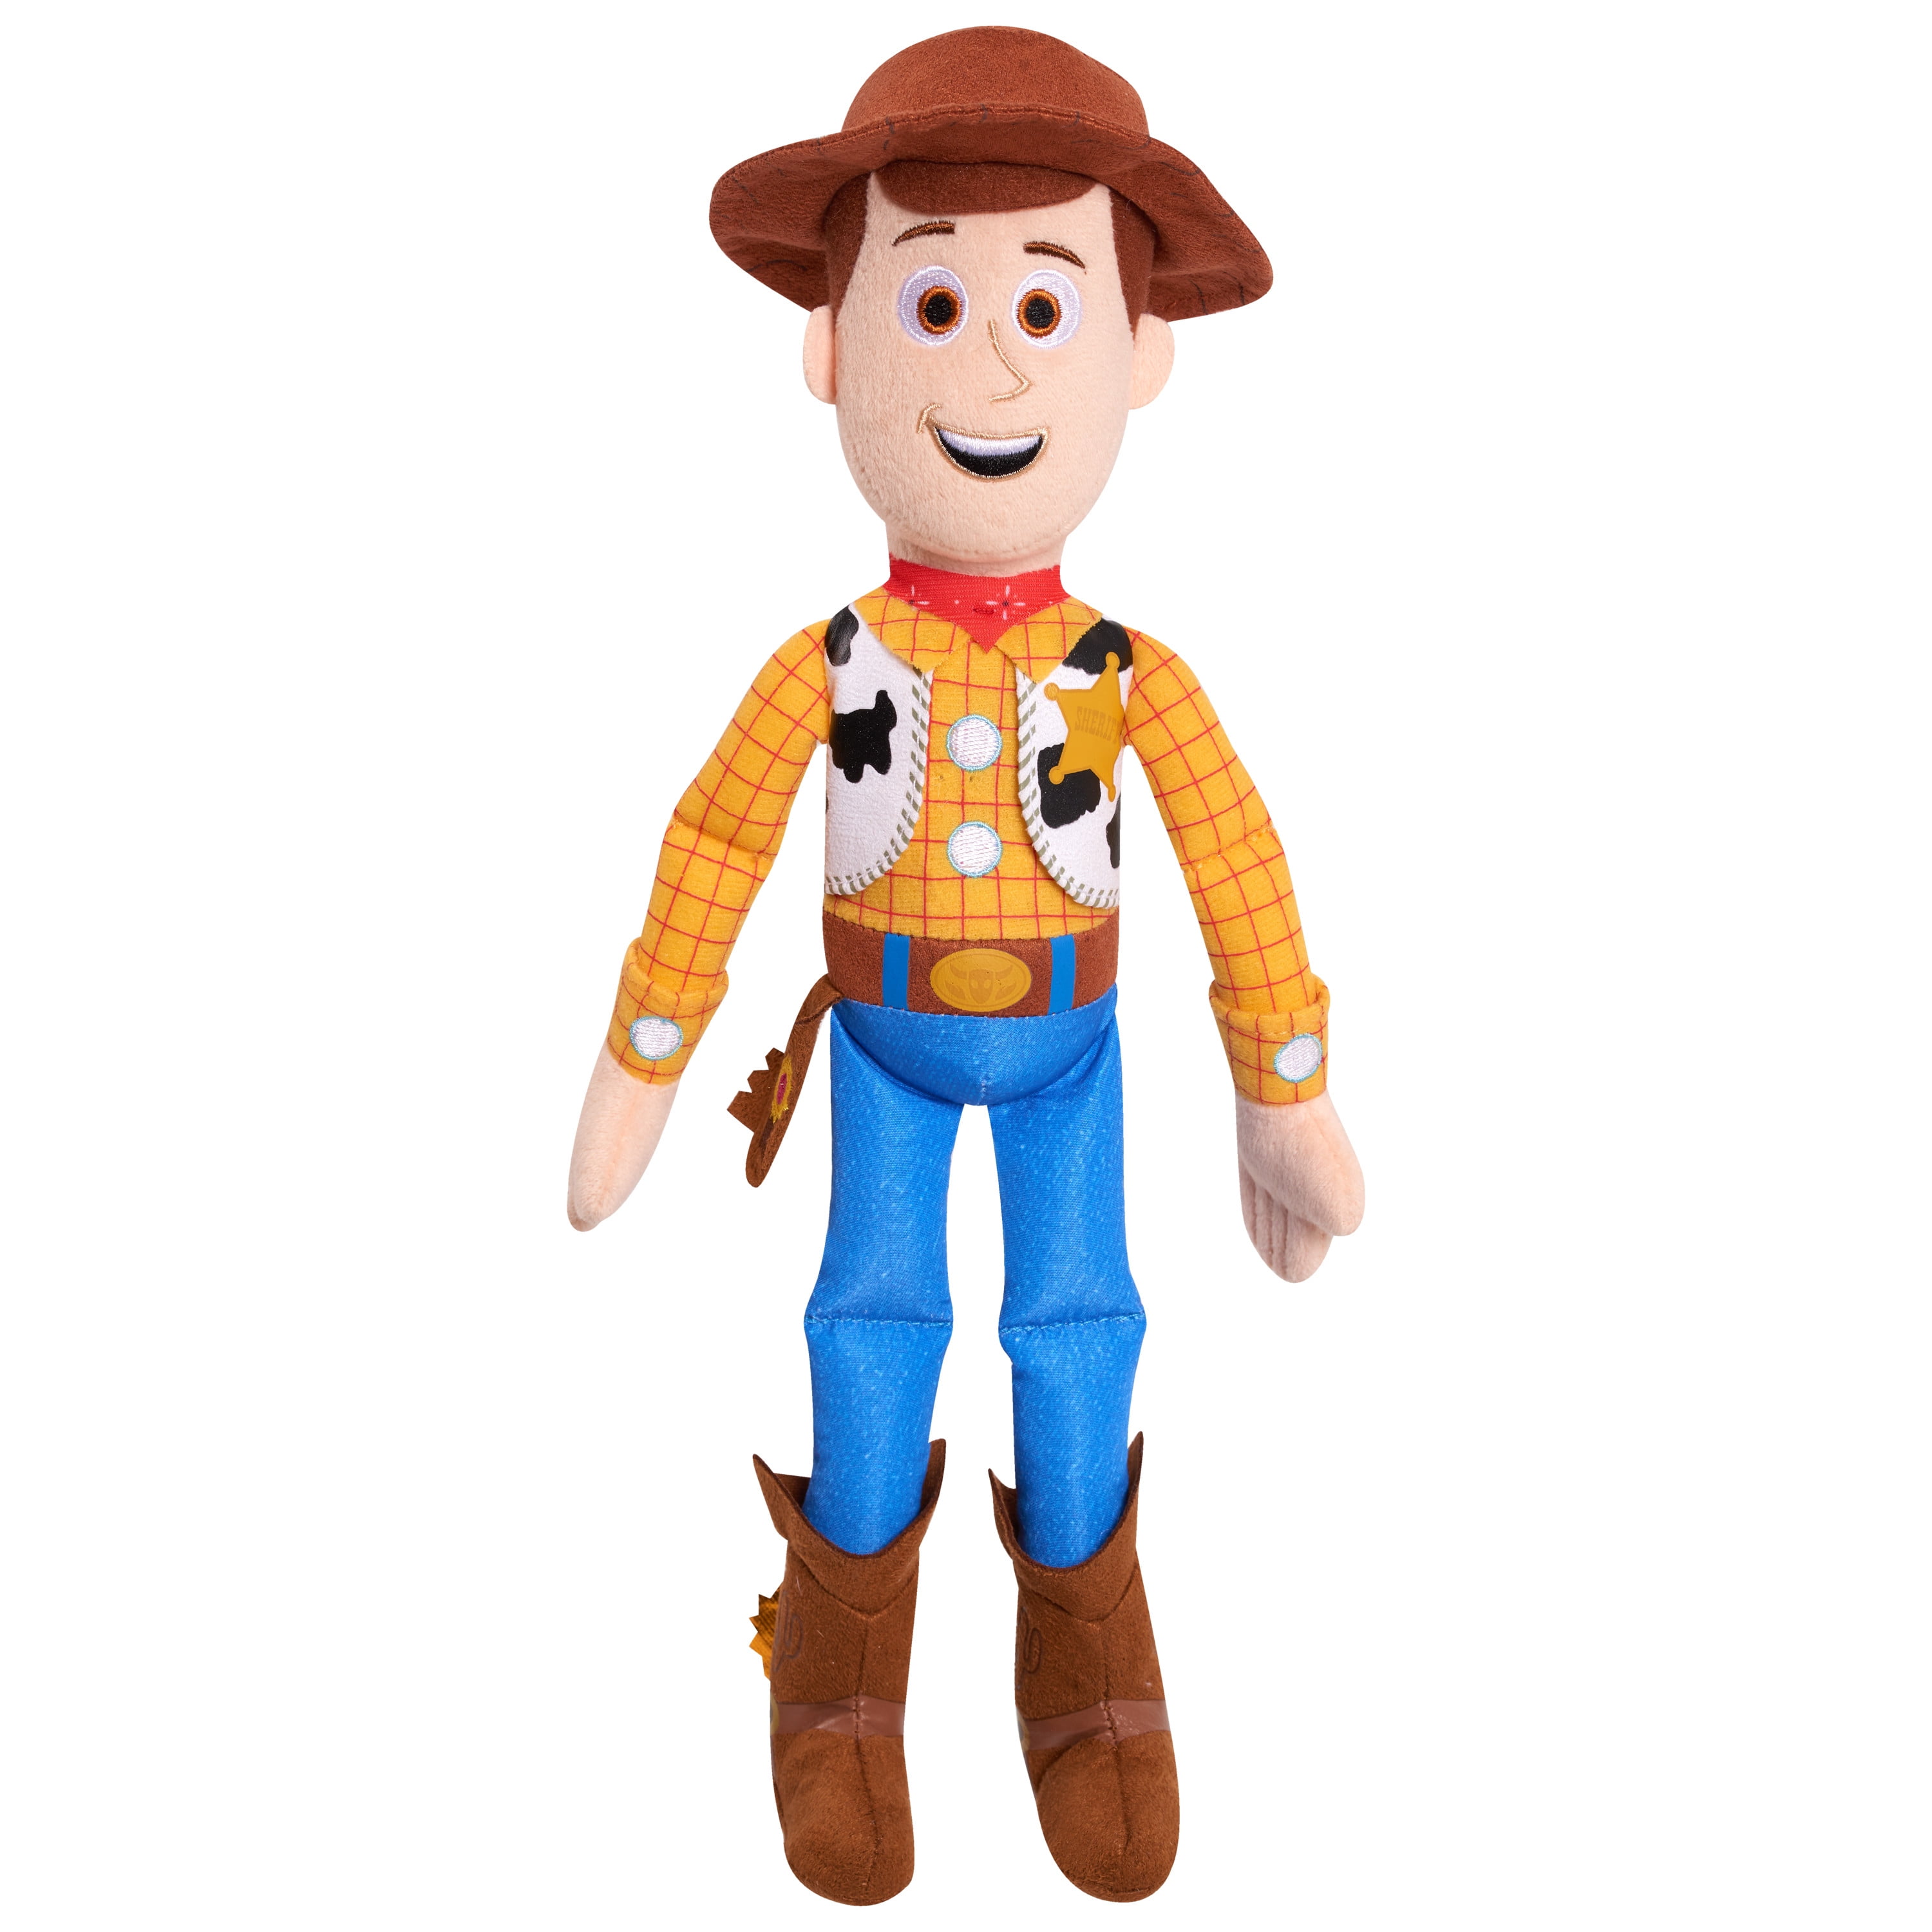 Toy Story 4 Woody Plush Stuffed Soft Dolls Gift For Kid Christmas Toys Xmas Gift